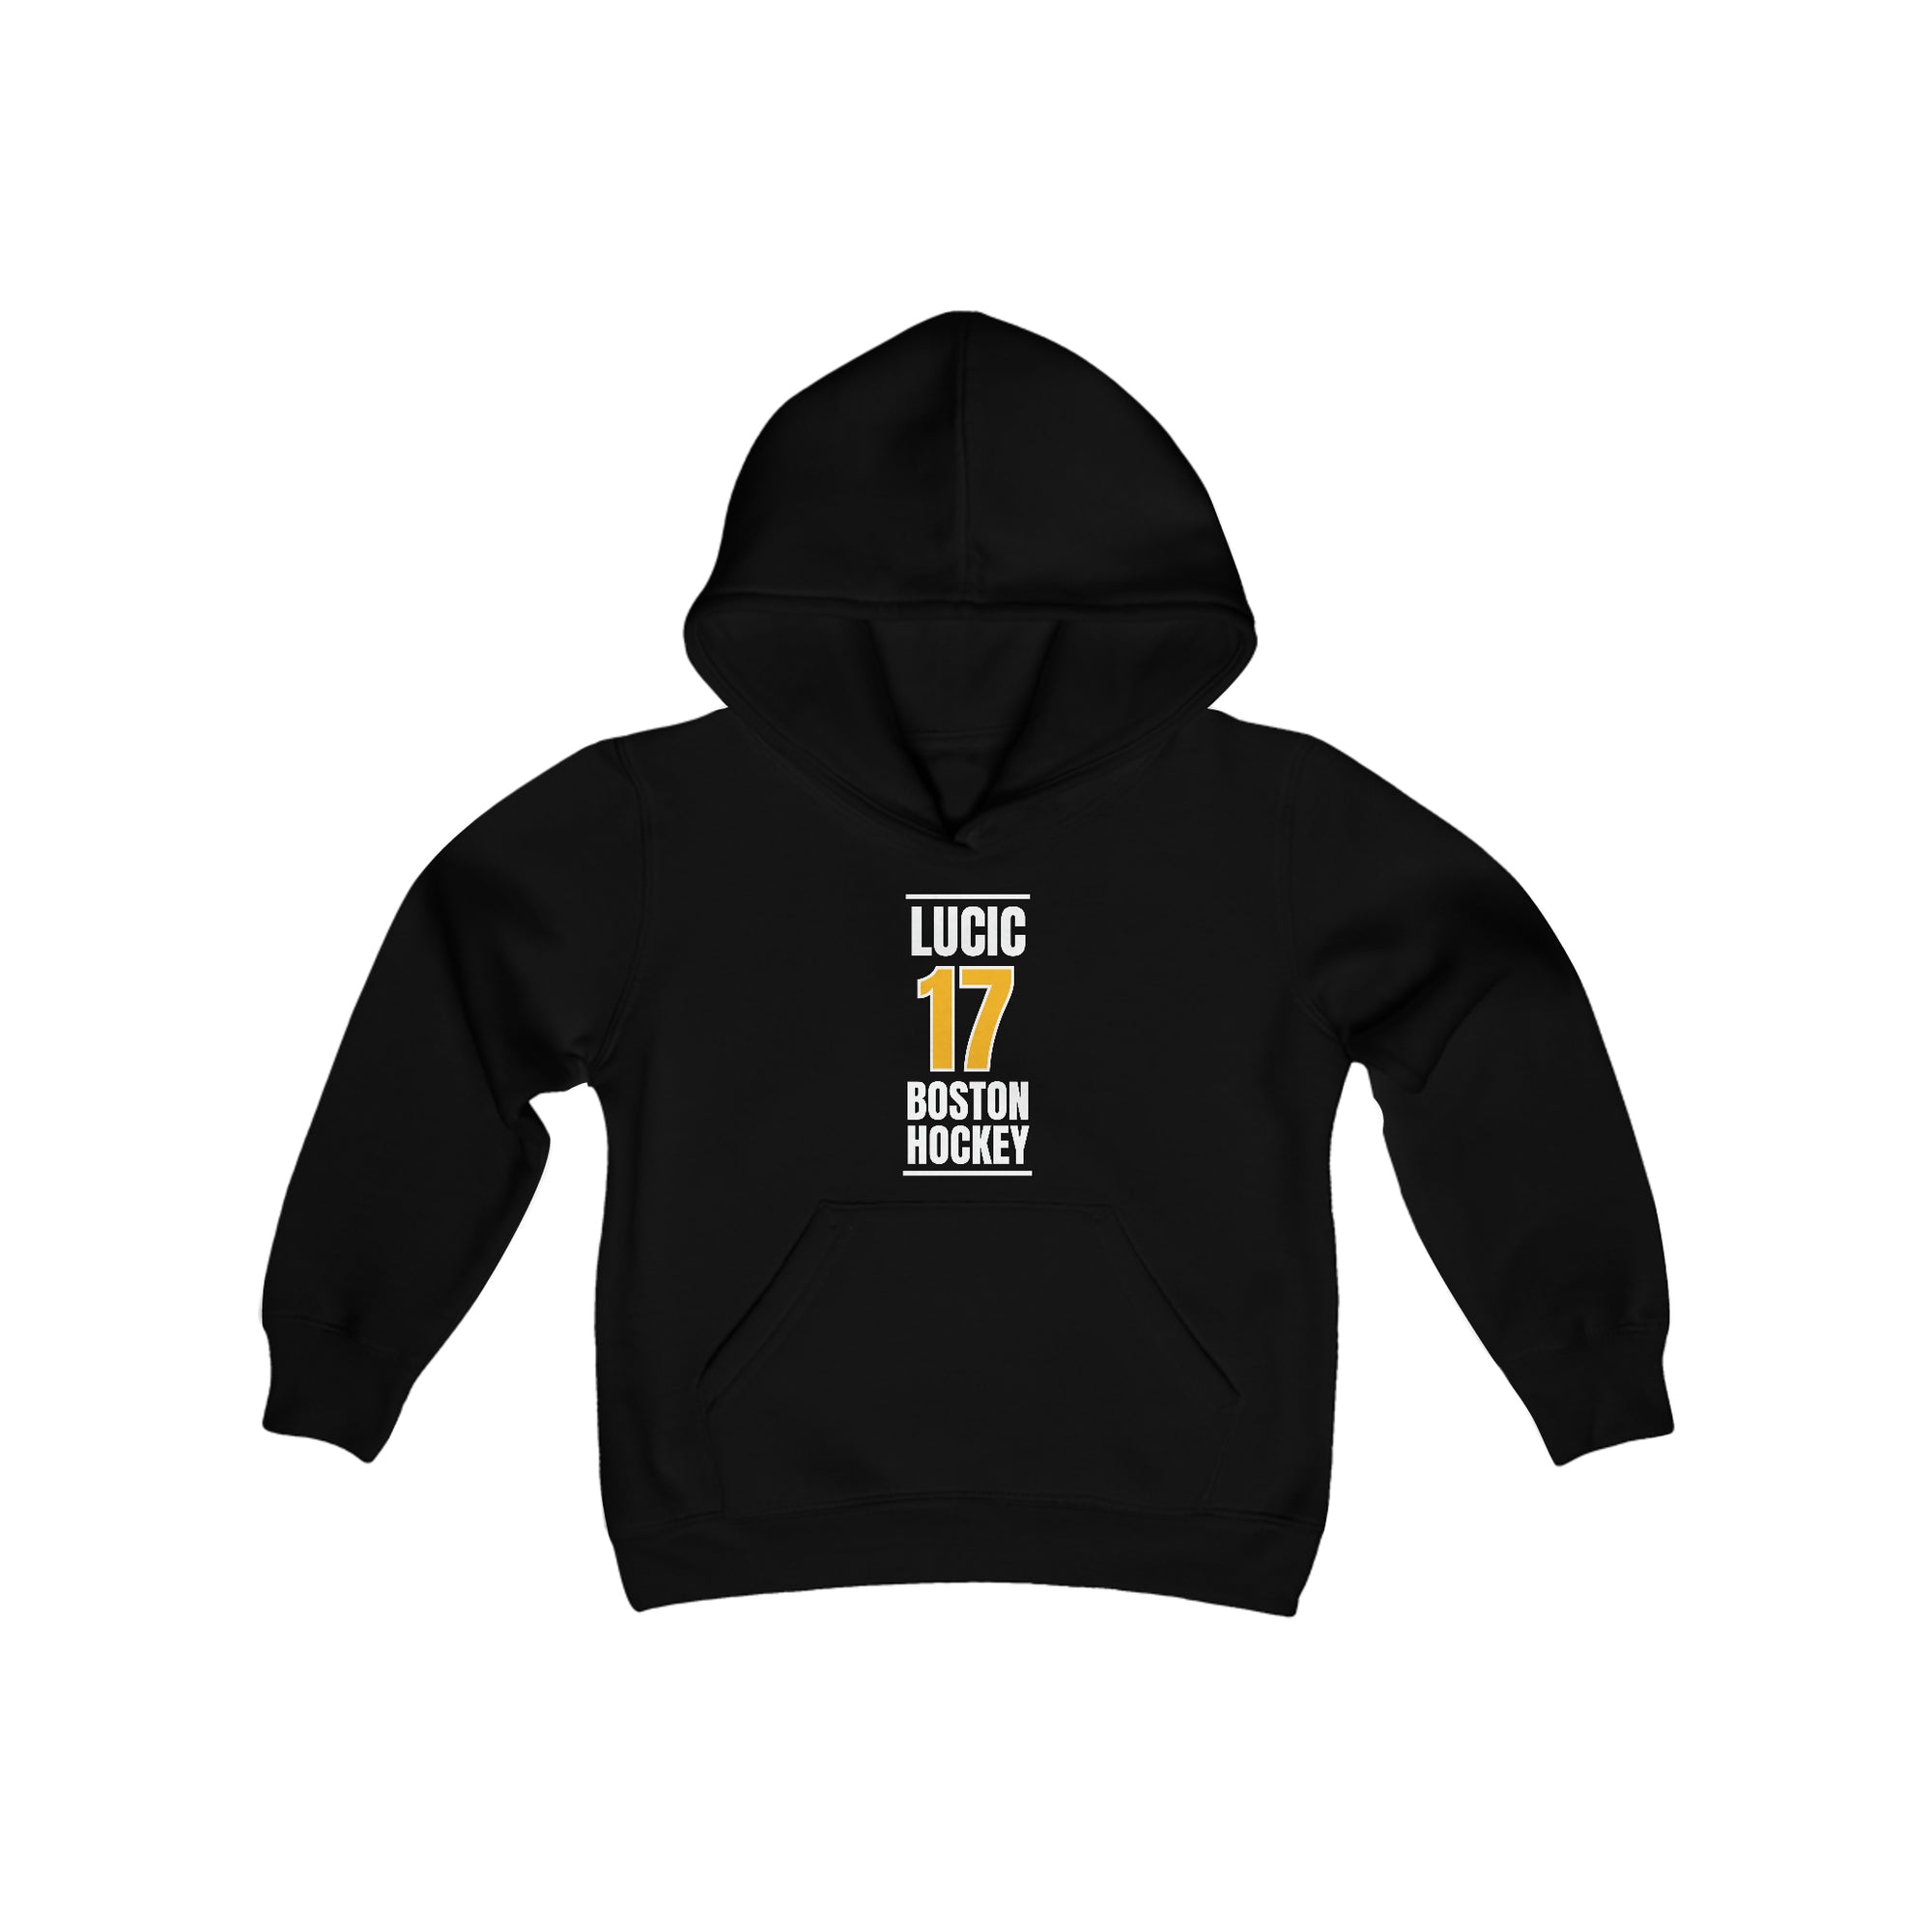 Lucic 17 Boston Hockey Gold Vertical Design Youth Hooded Sweatshirt